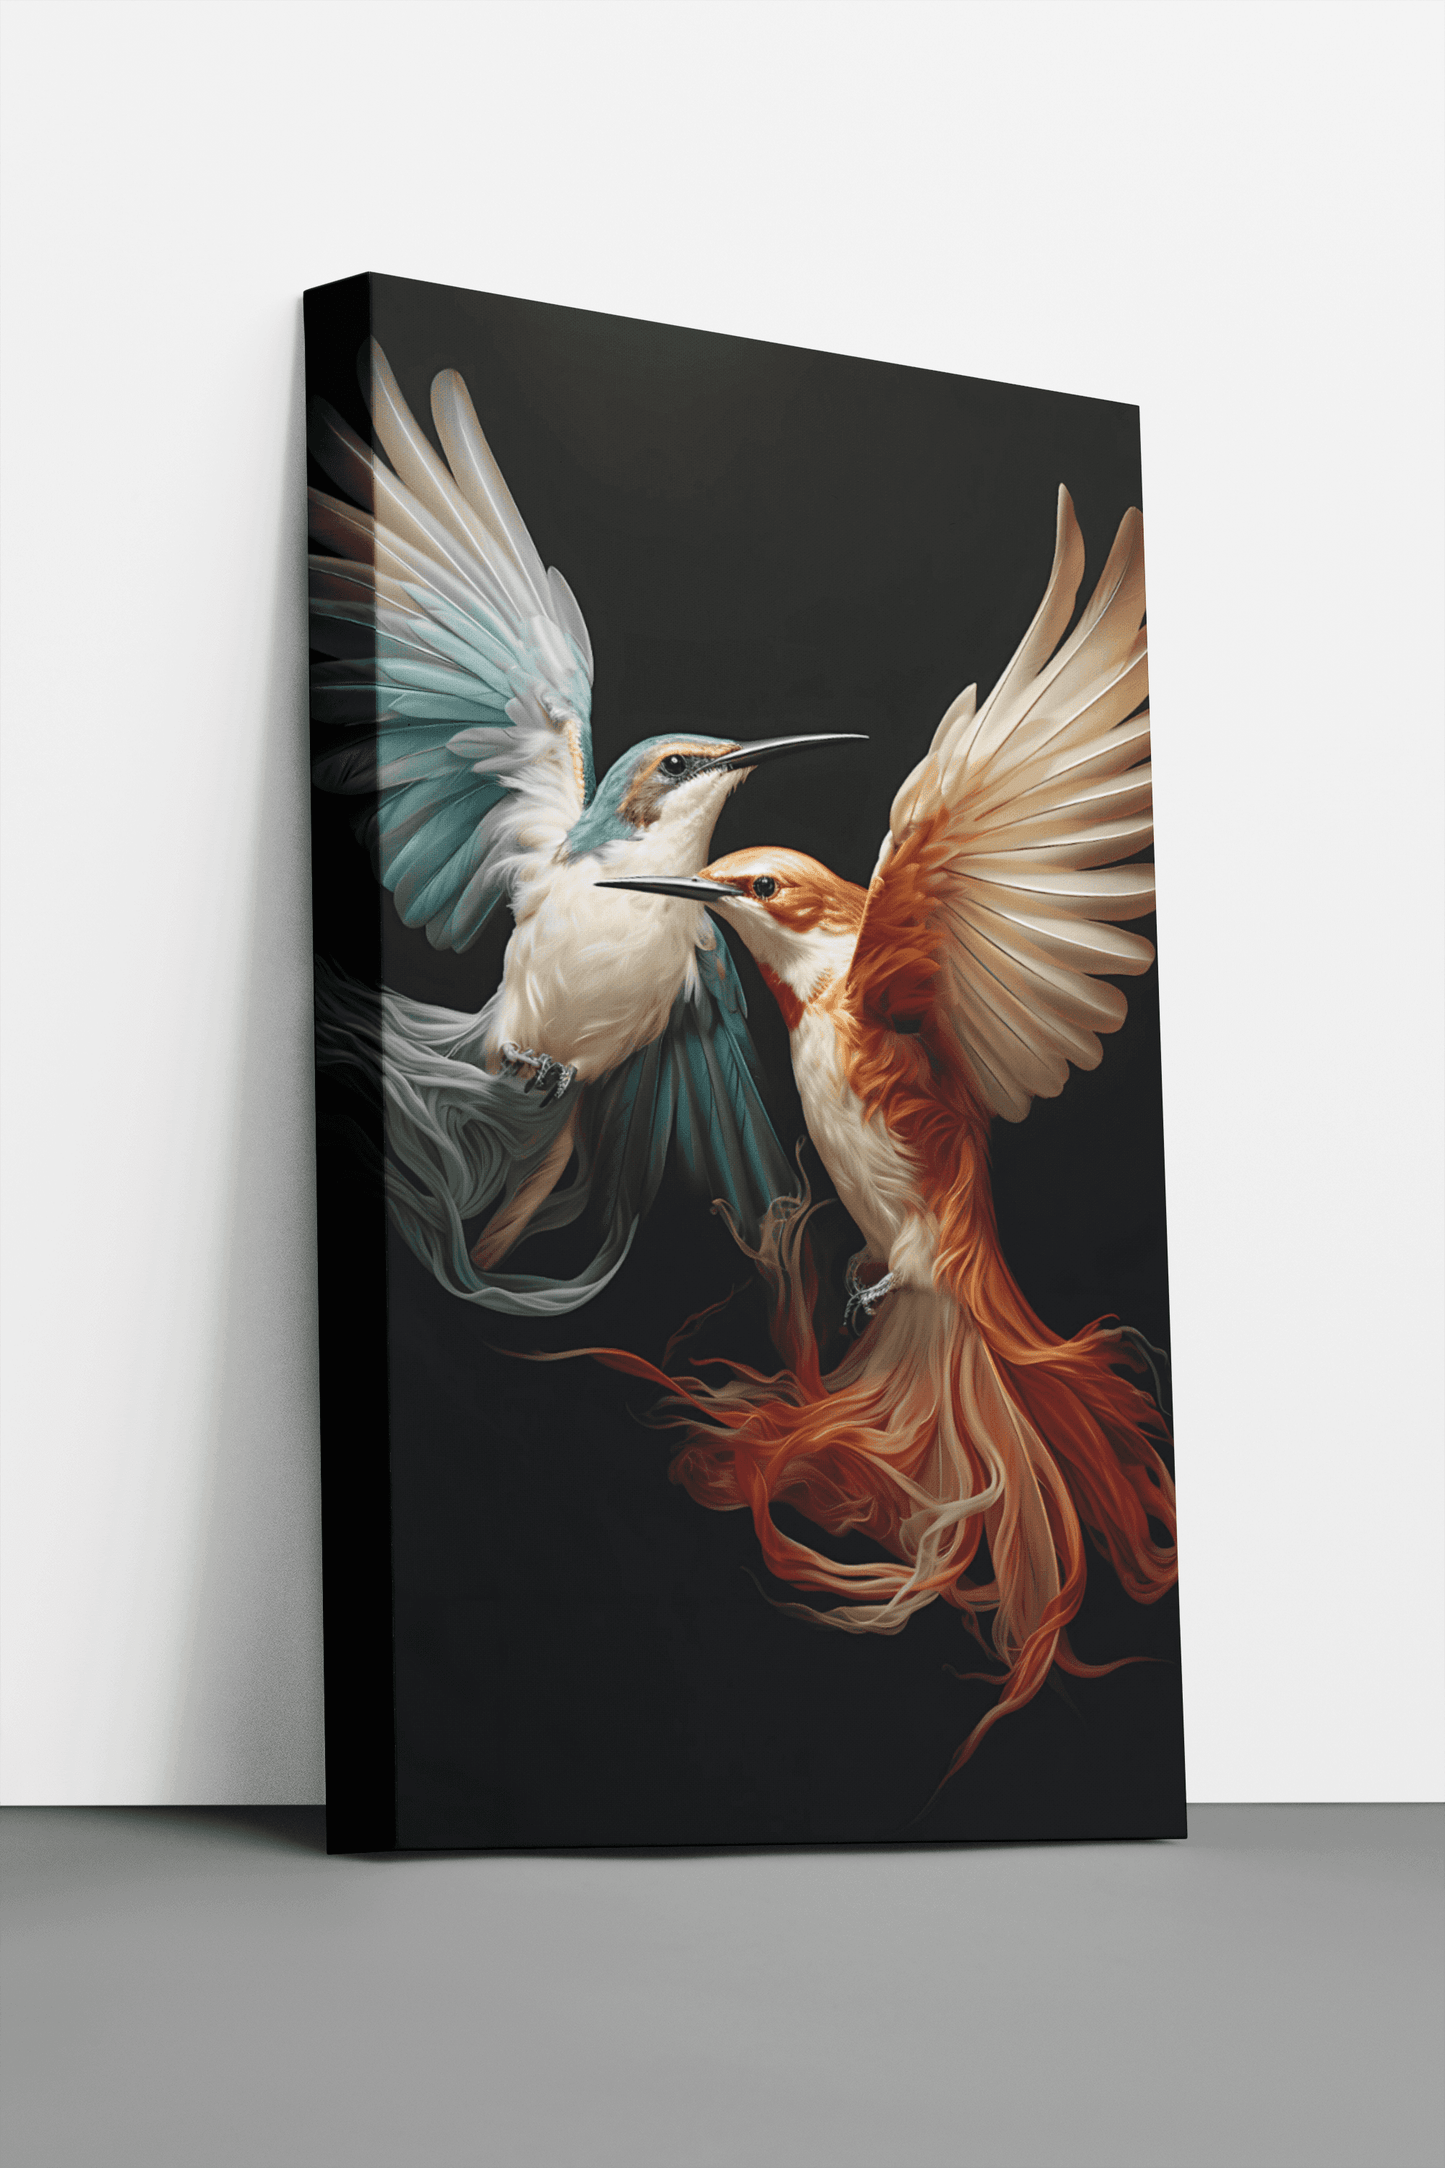 Harmonious Flight: A Symphony of Freedom - Canvas Print